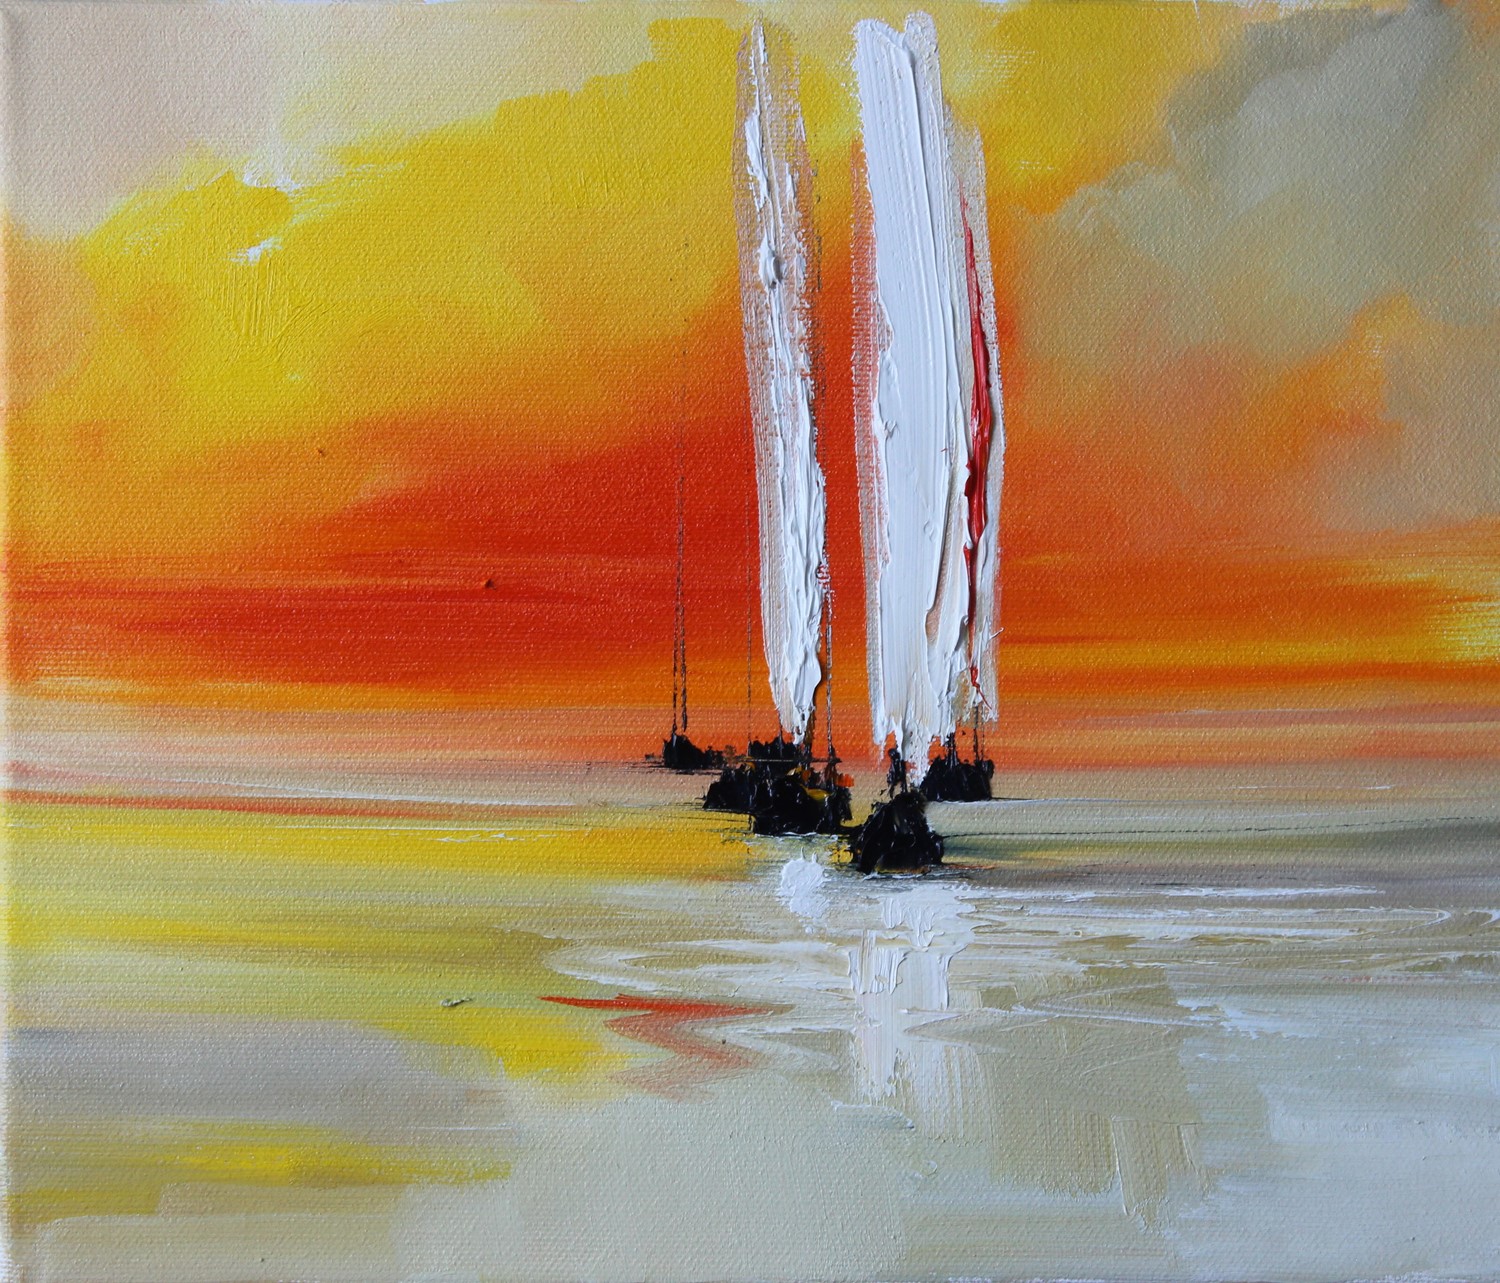 'Sails set at Sunset' by artist Rosanne Barr